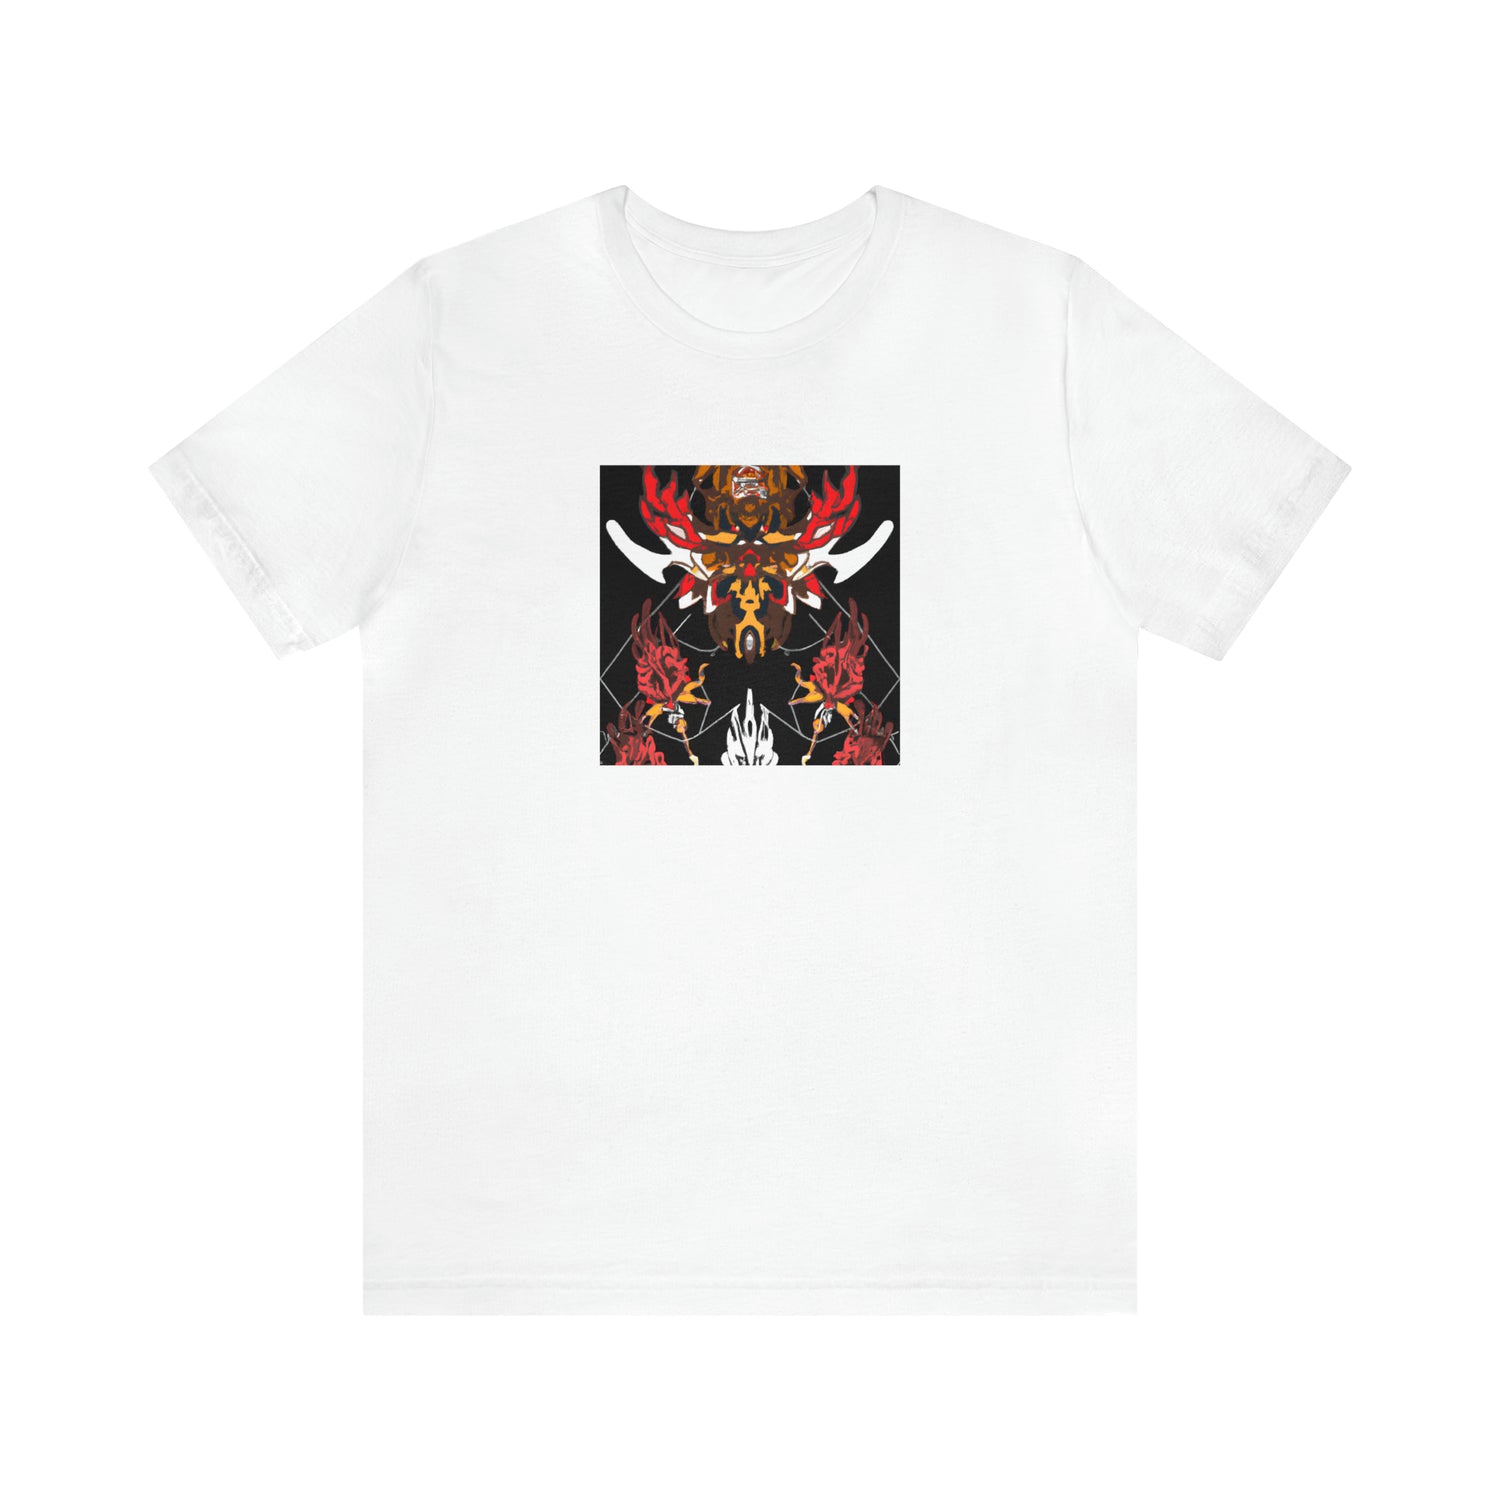 Alacrity Prints Designer Tee - "Mind Wattage" - Streetwear T-Shirt